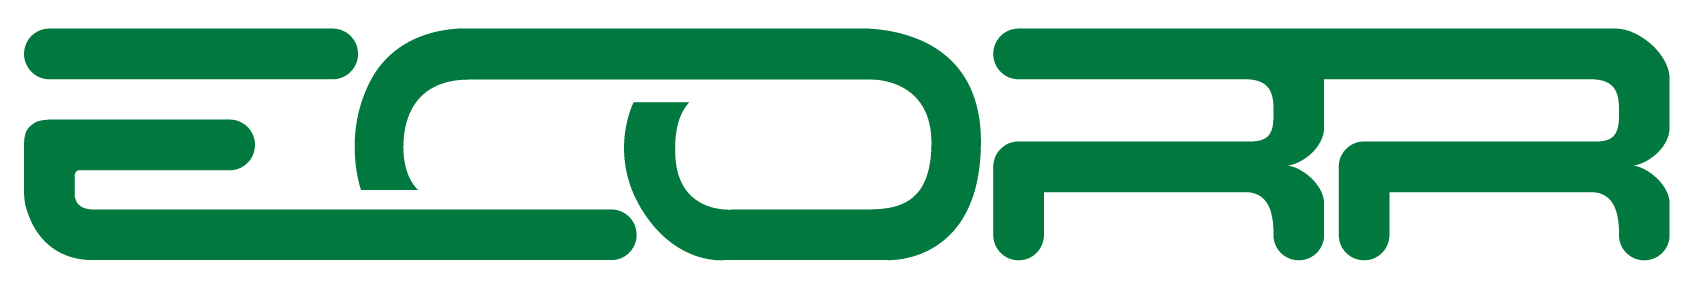 ECORR-Logo-Green;